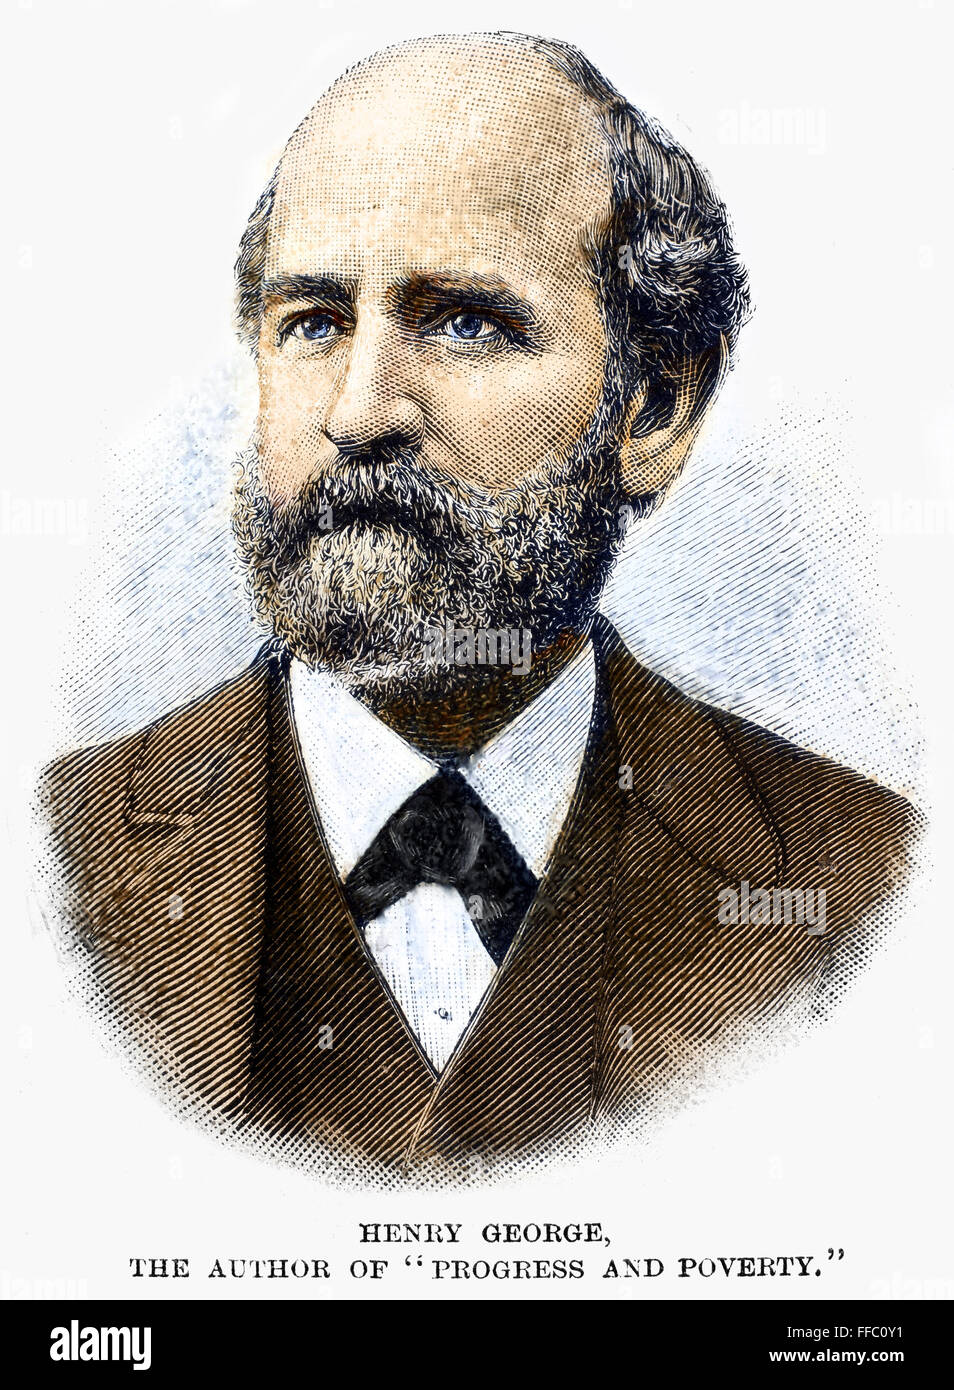 HENRY GEORGE (1839-1897). /nAmerican economist. Wood engraving, 19th century. Stock Photo